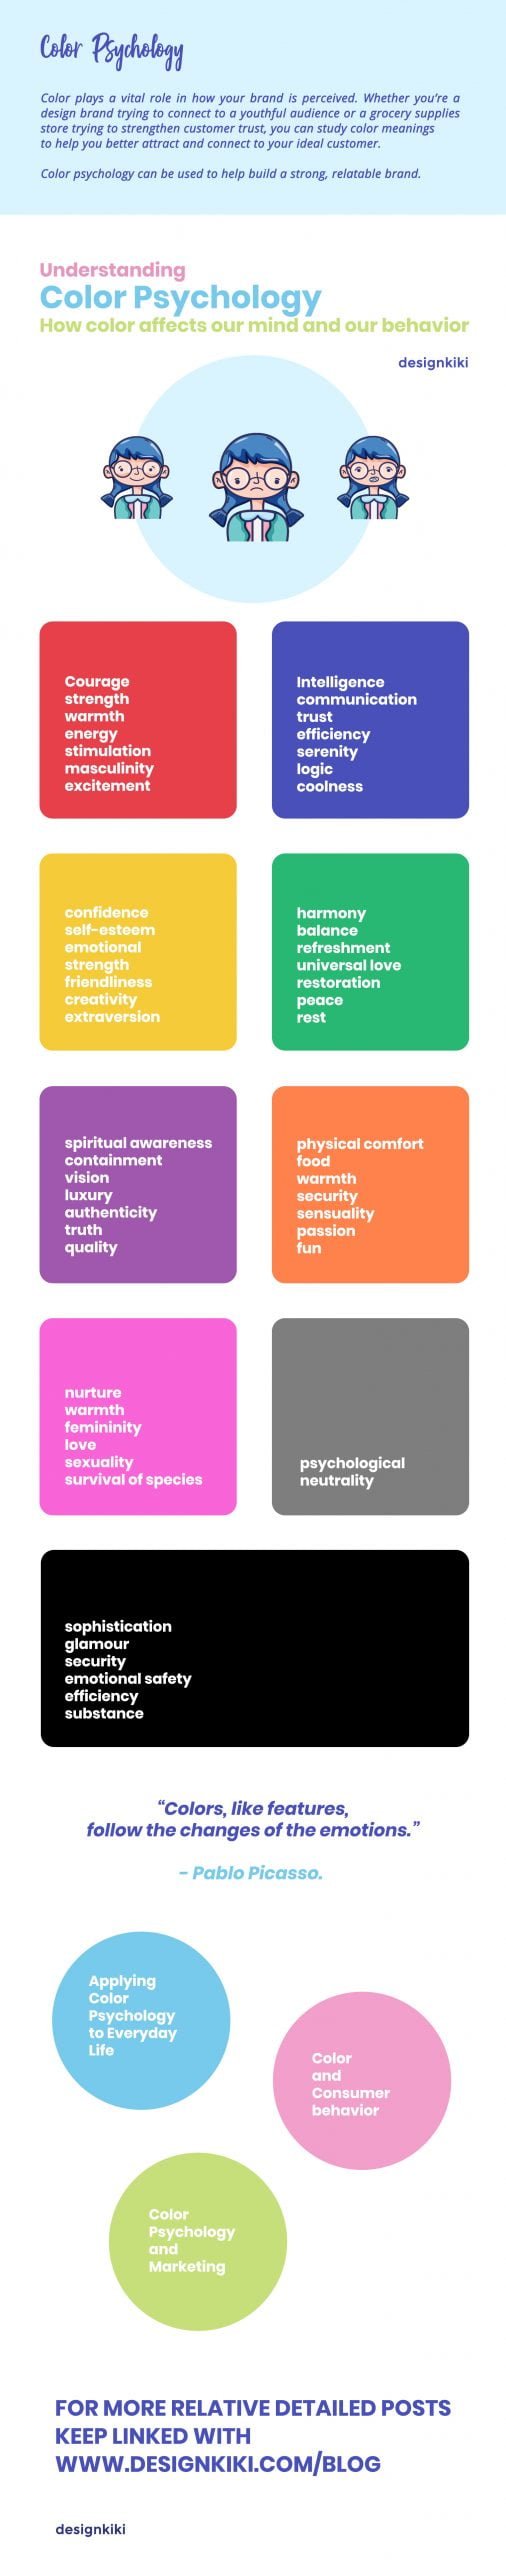 understanding color psychology